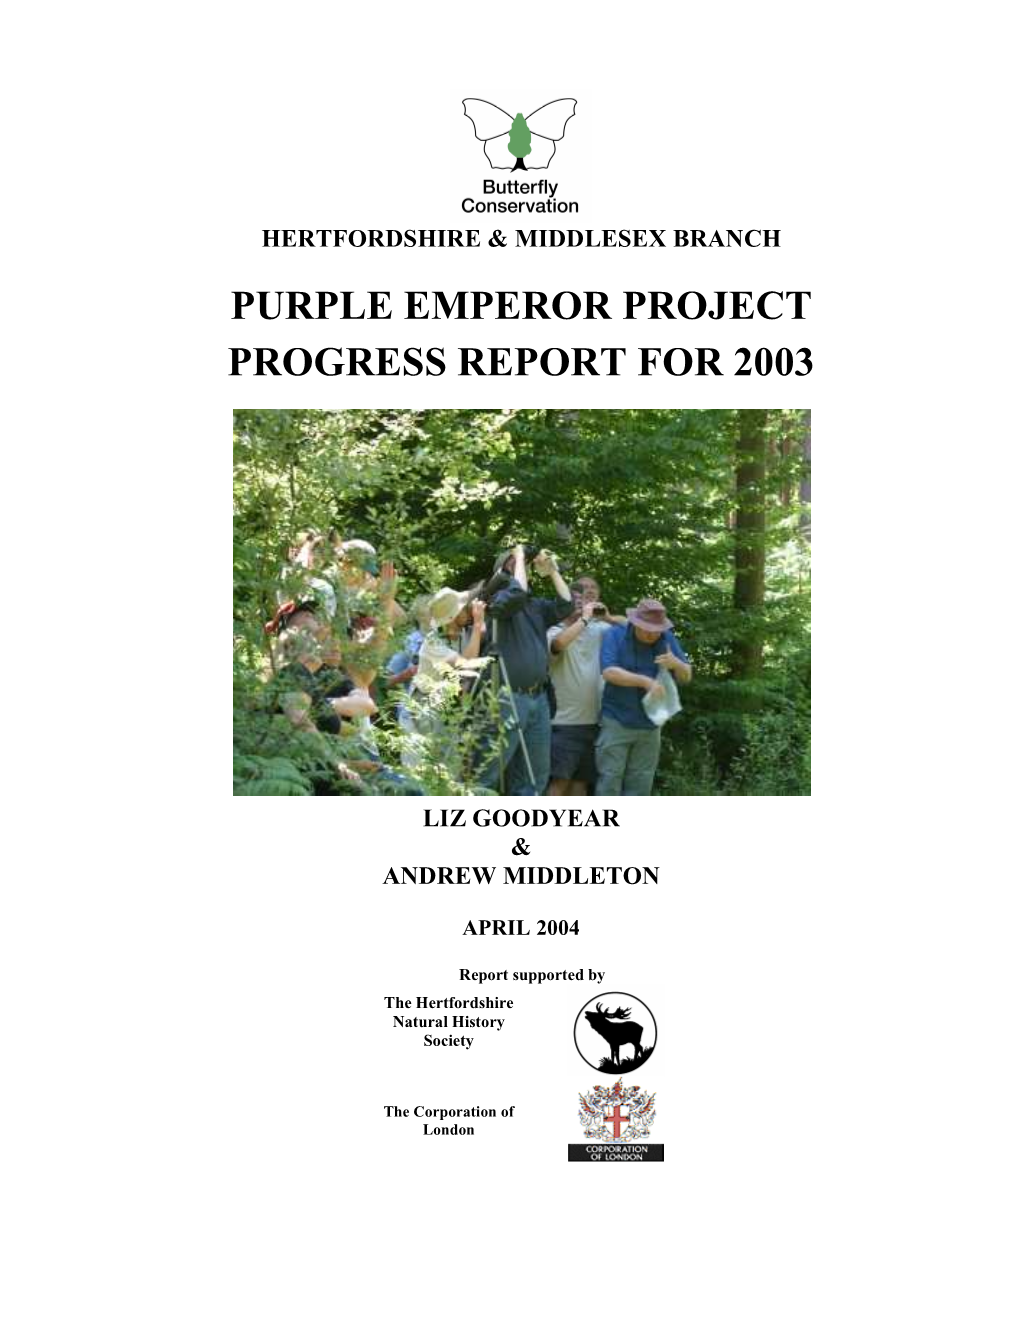 Progress Report 2003